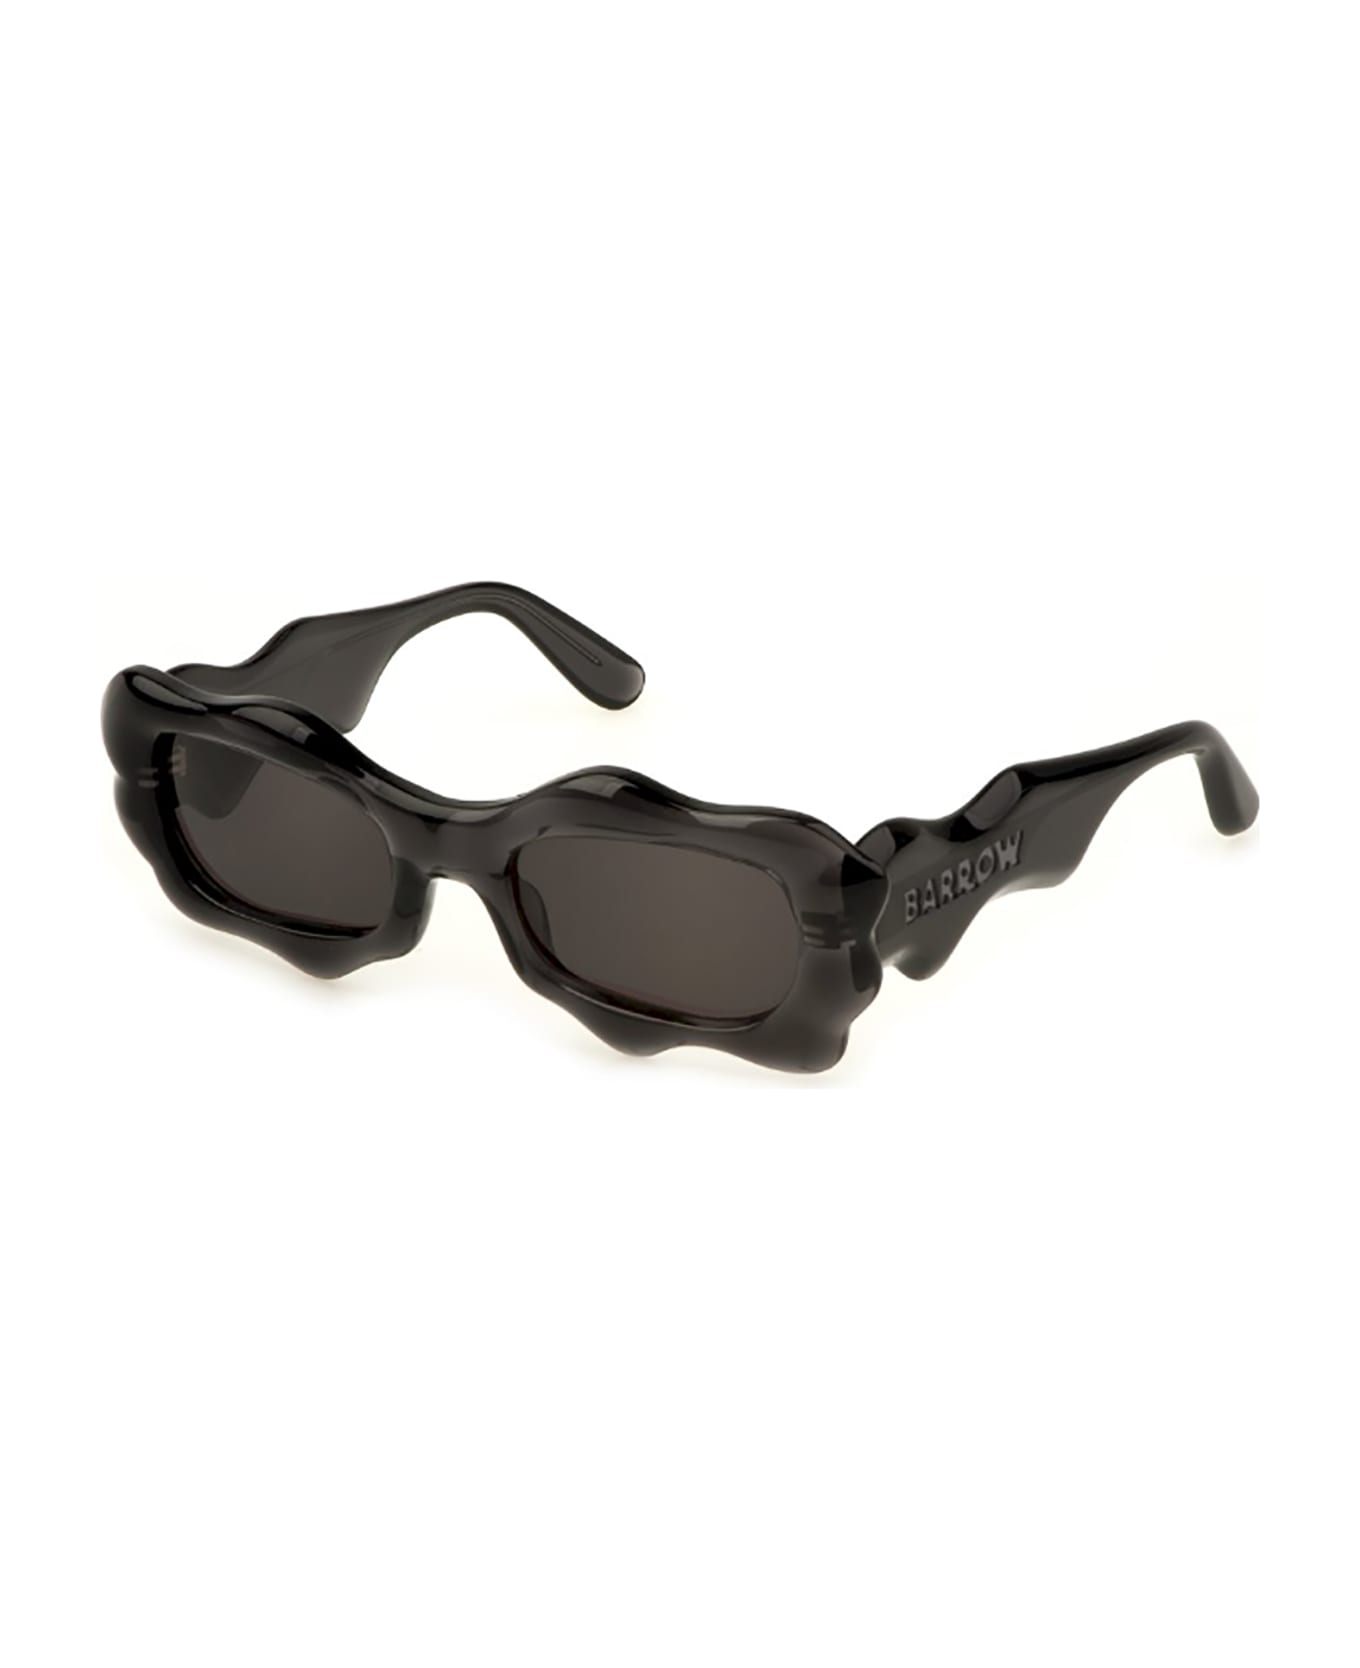 Barrow SBA005 Sunglasses